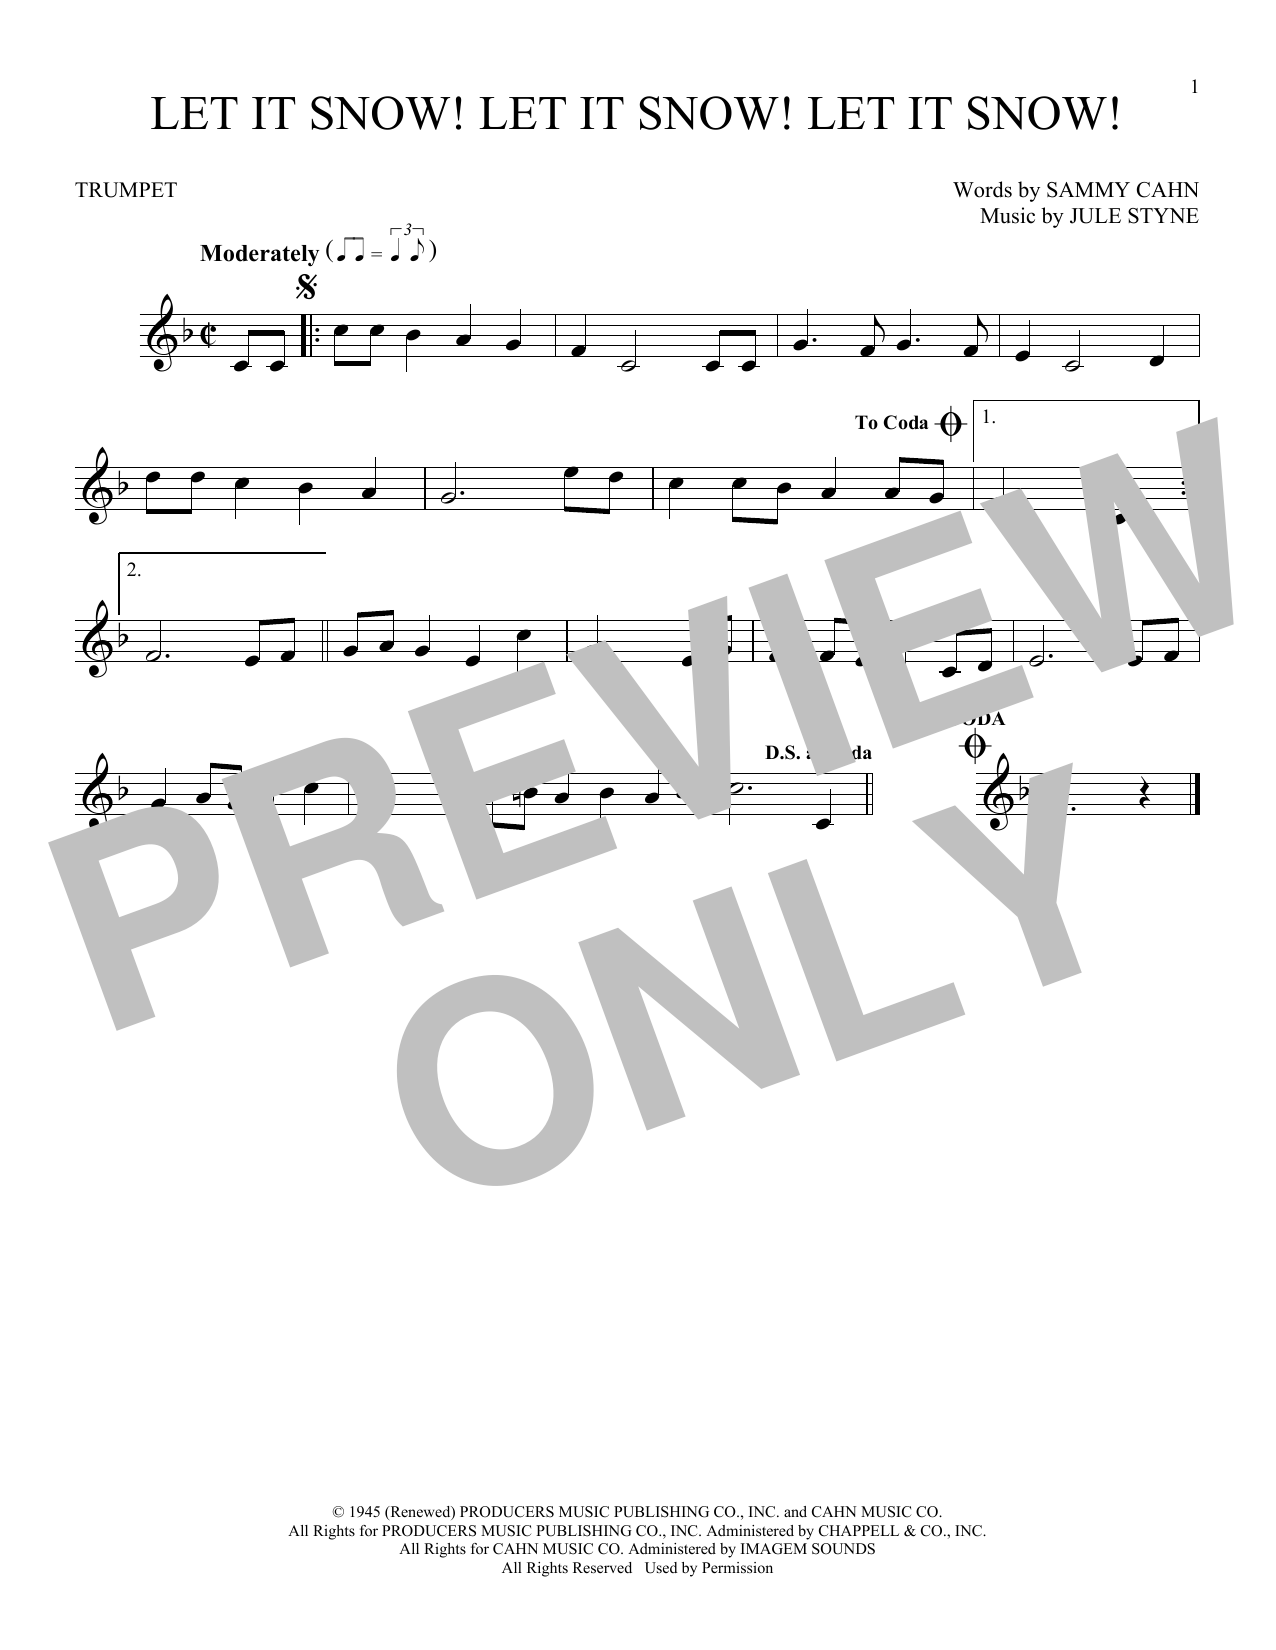 Sammy Cahn & Julie Styne Let It Snow! Let It Snow! Let It Snow! Sheet Music Notes & Chords for Violin - Download or Print PDF